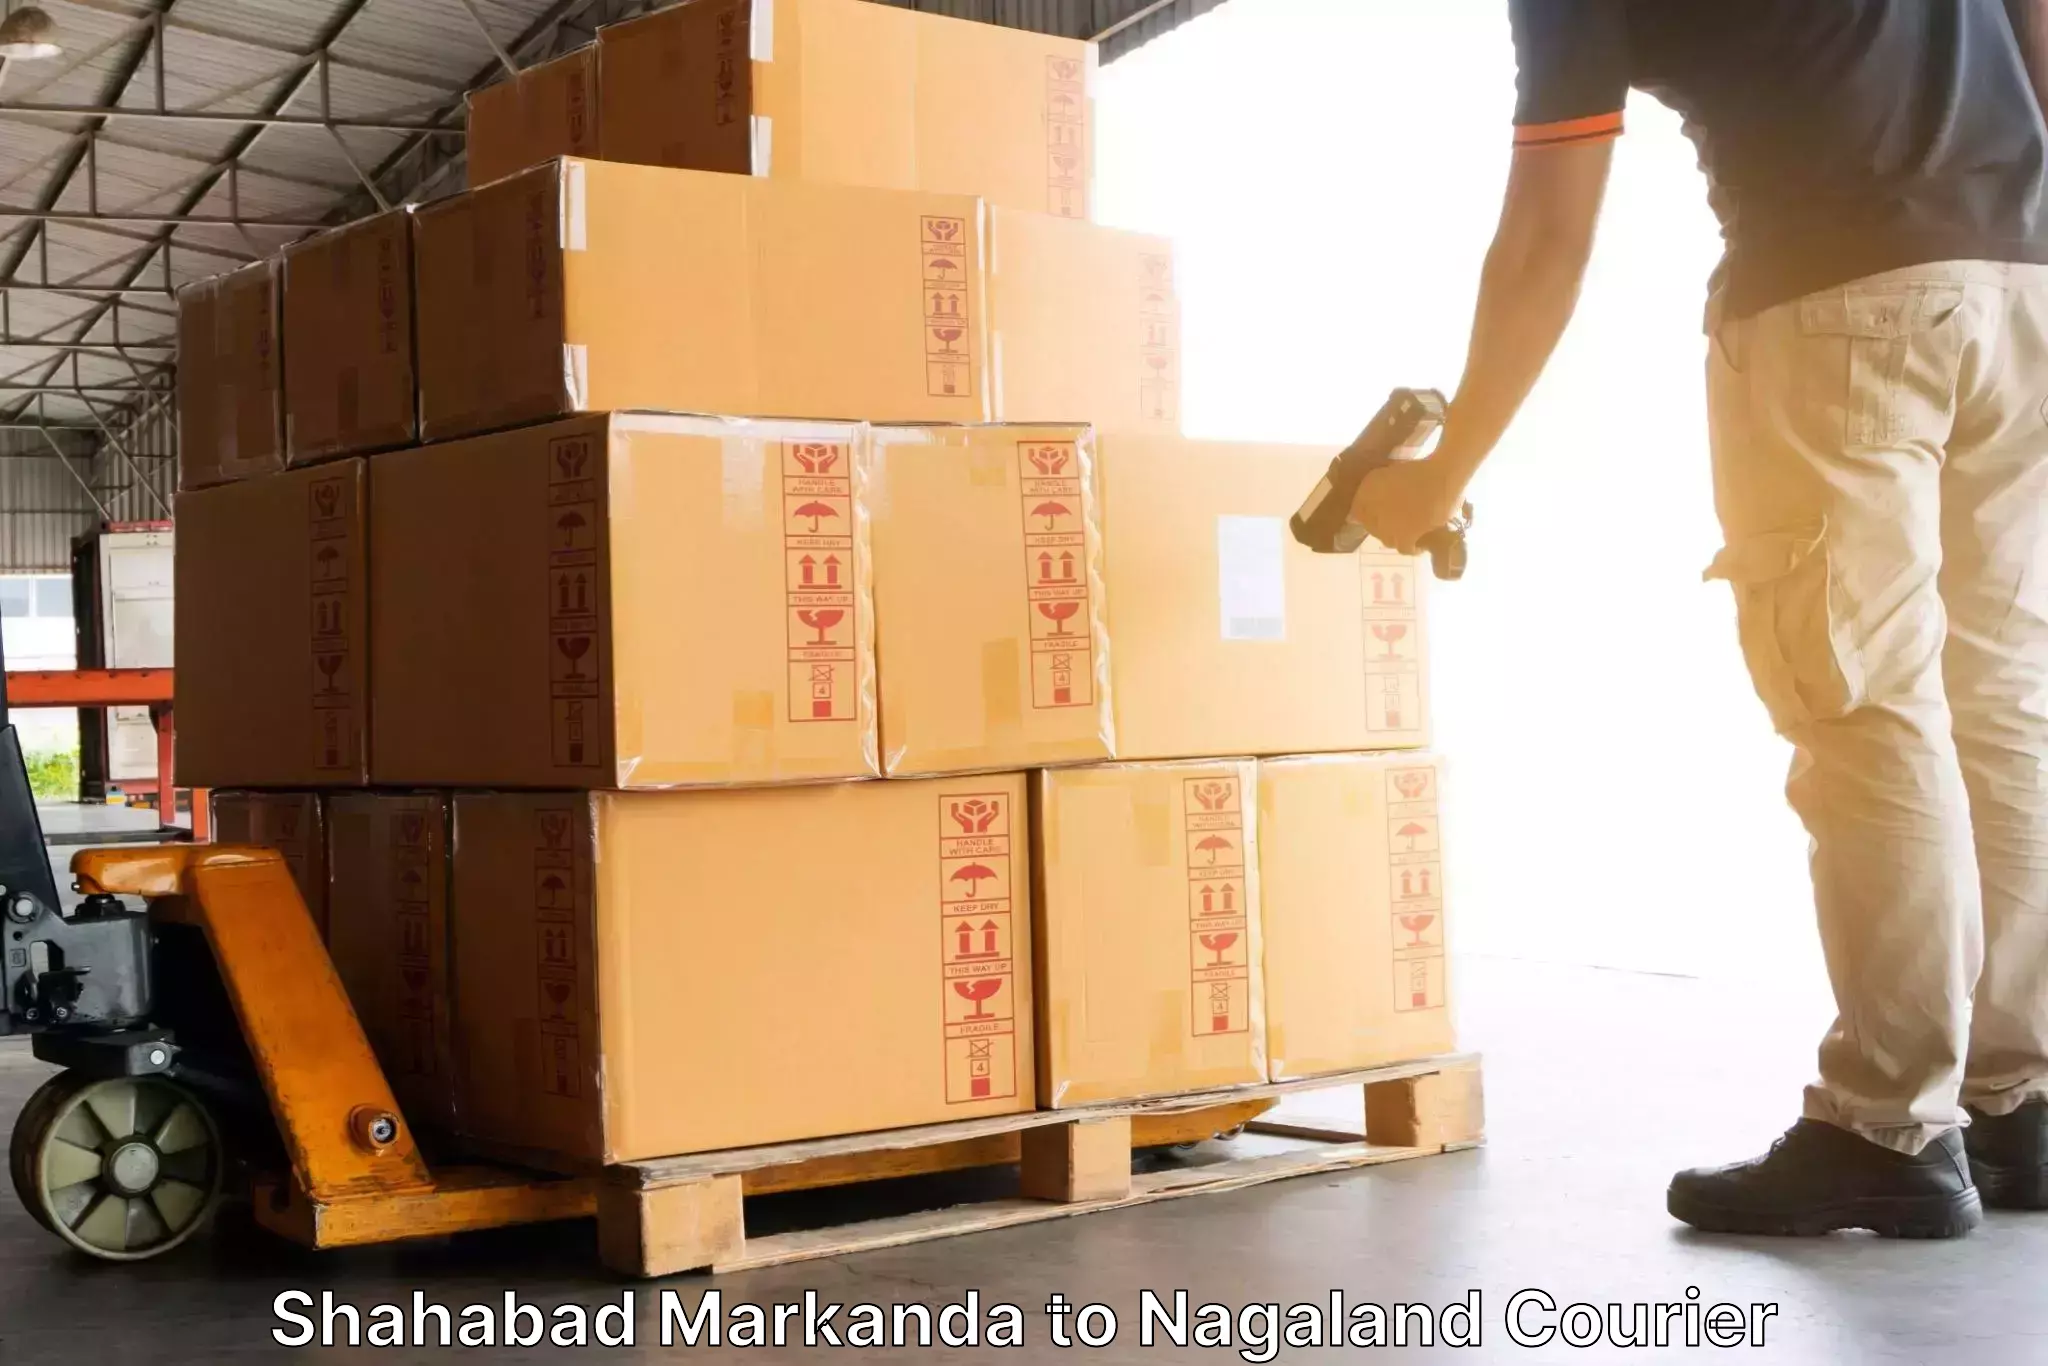 Express delivery network Shahabad Markanda to Nagaland